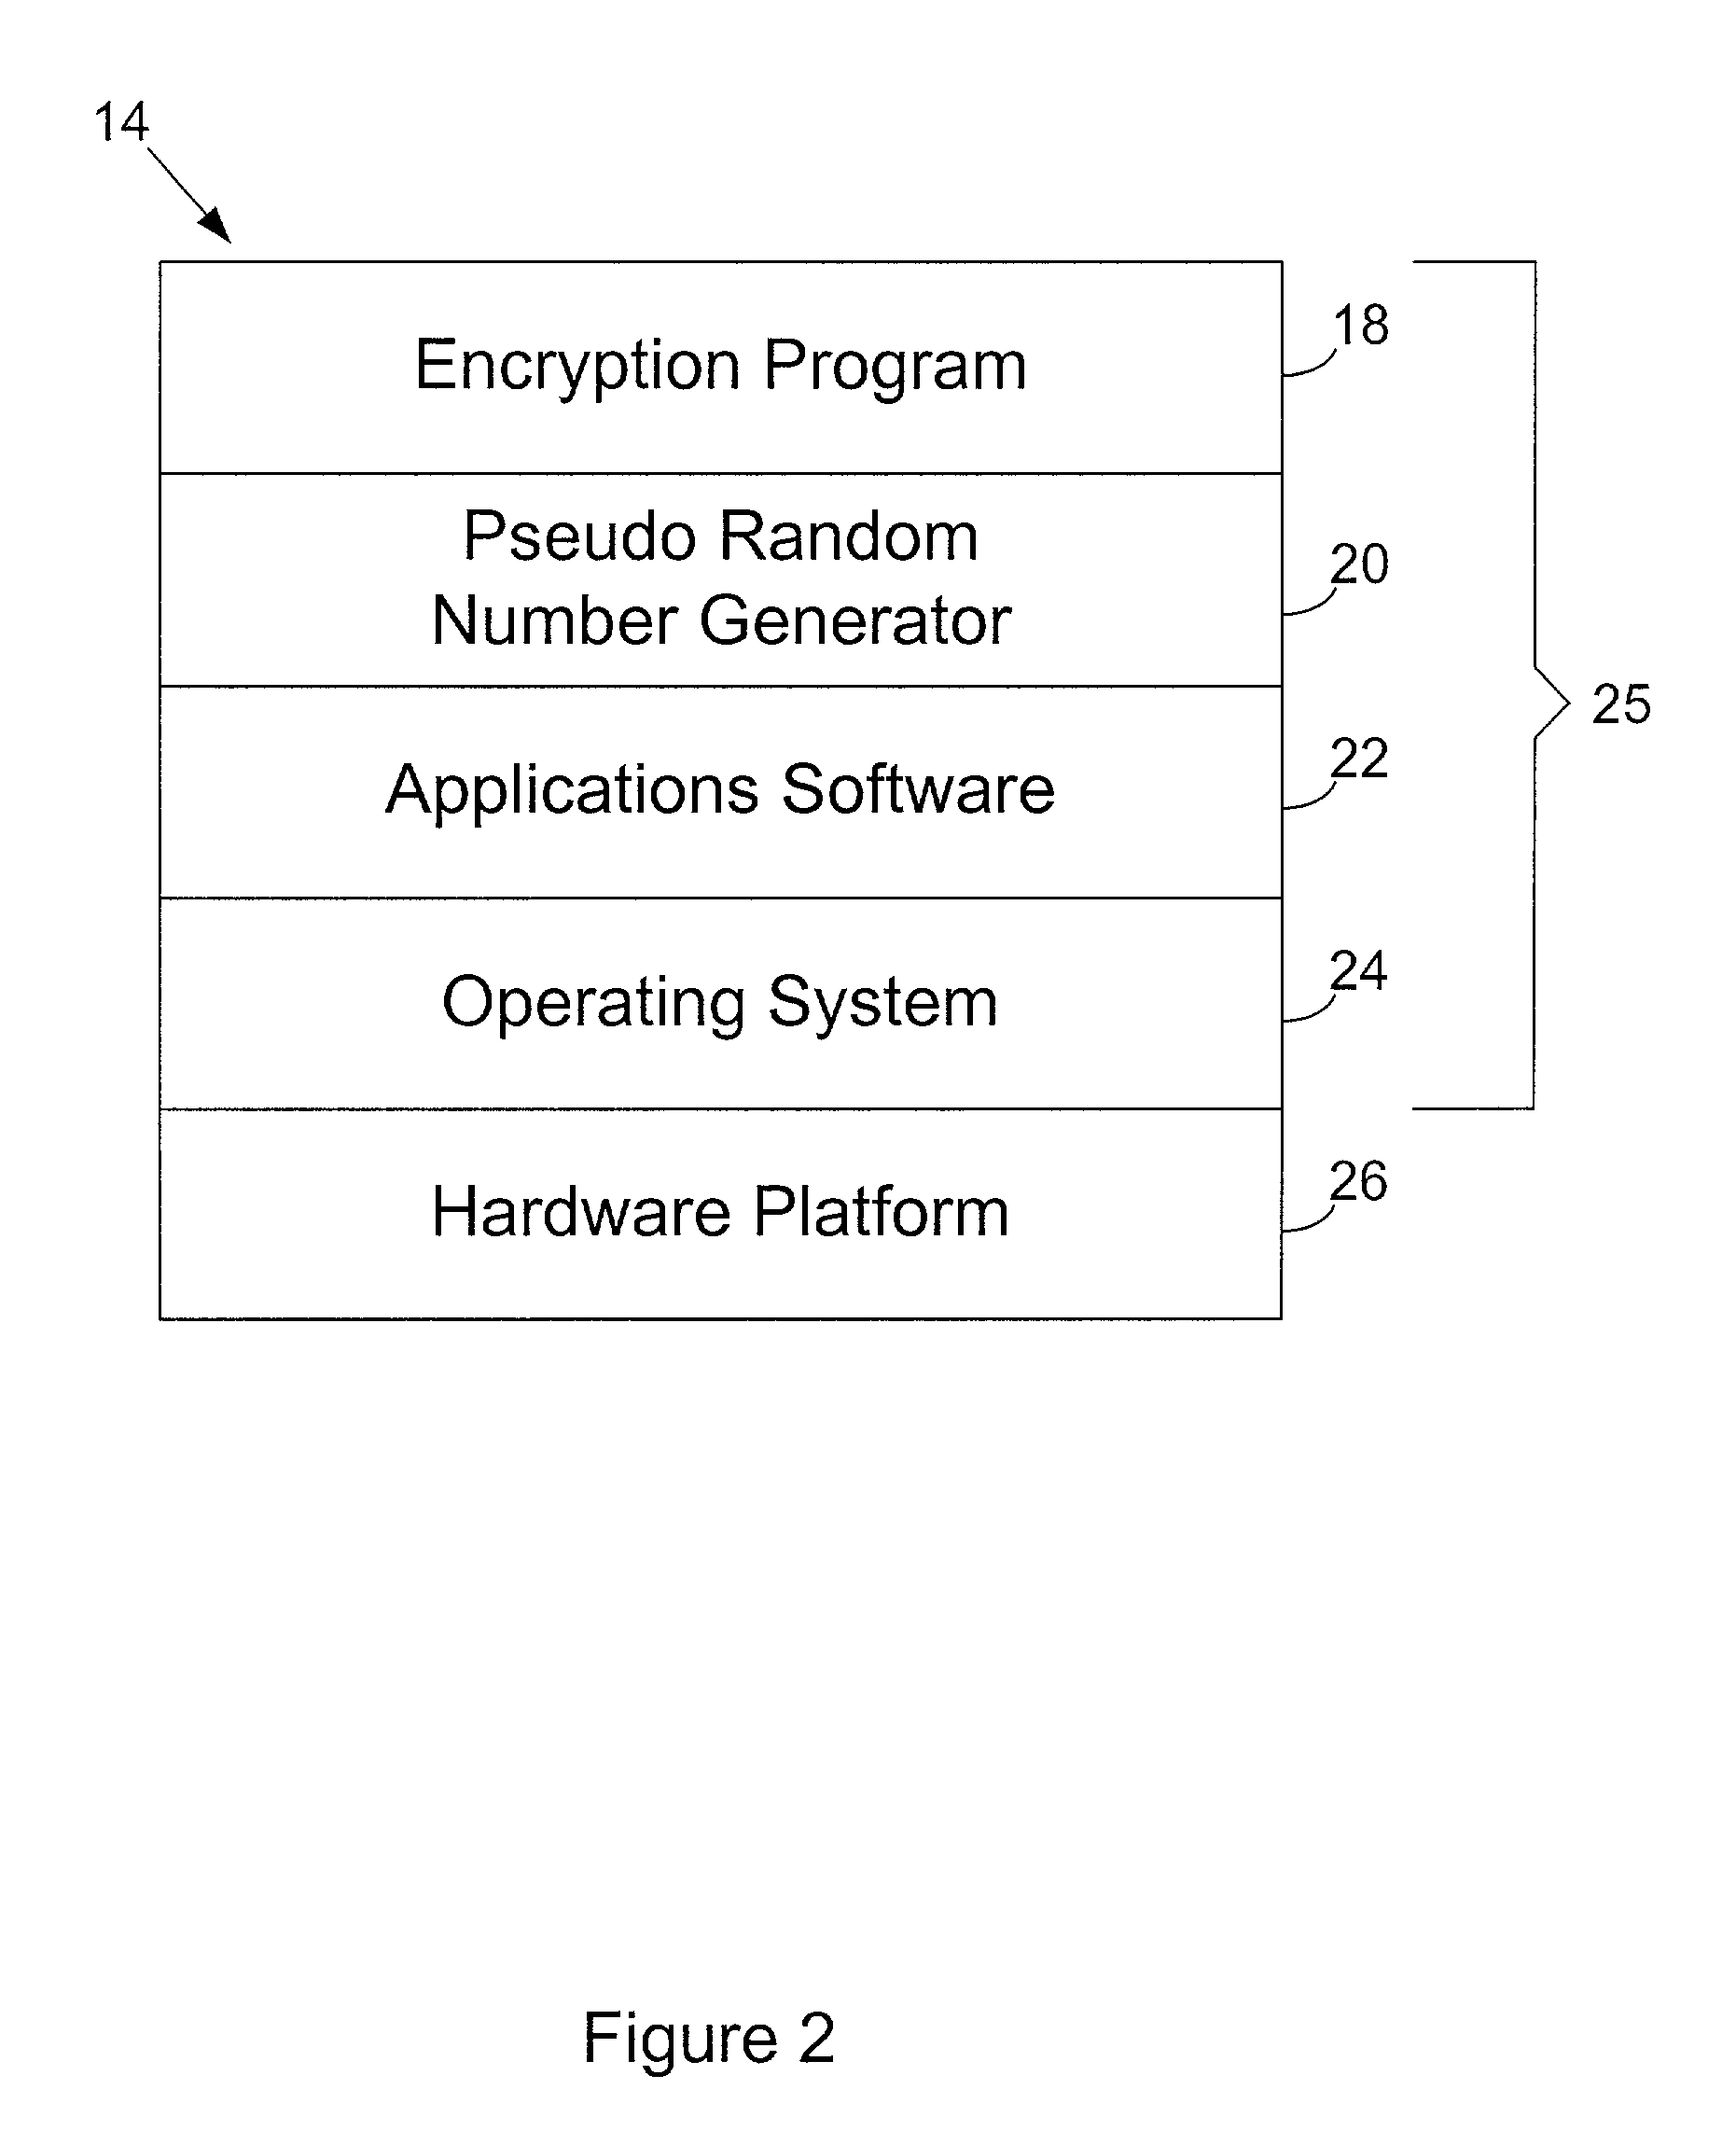 Entropy sources for encryption key generation